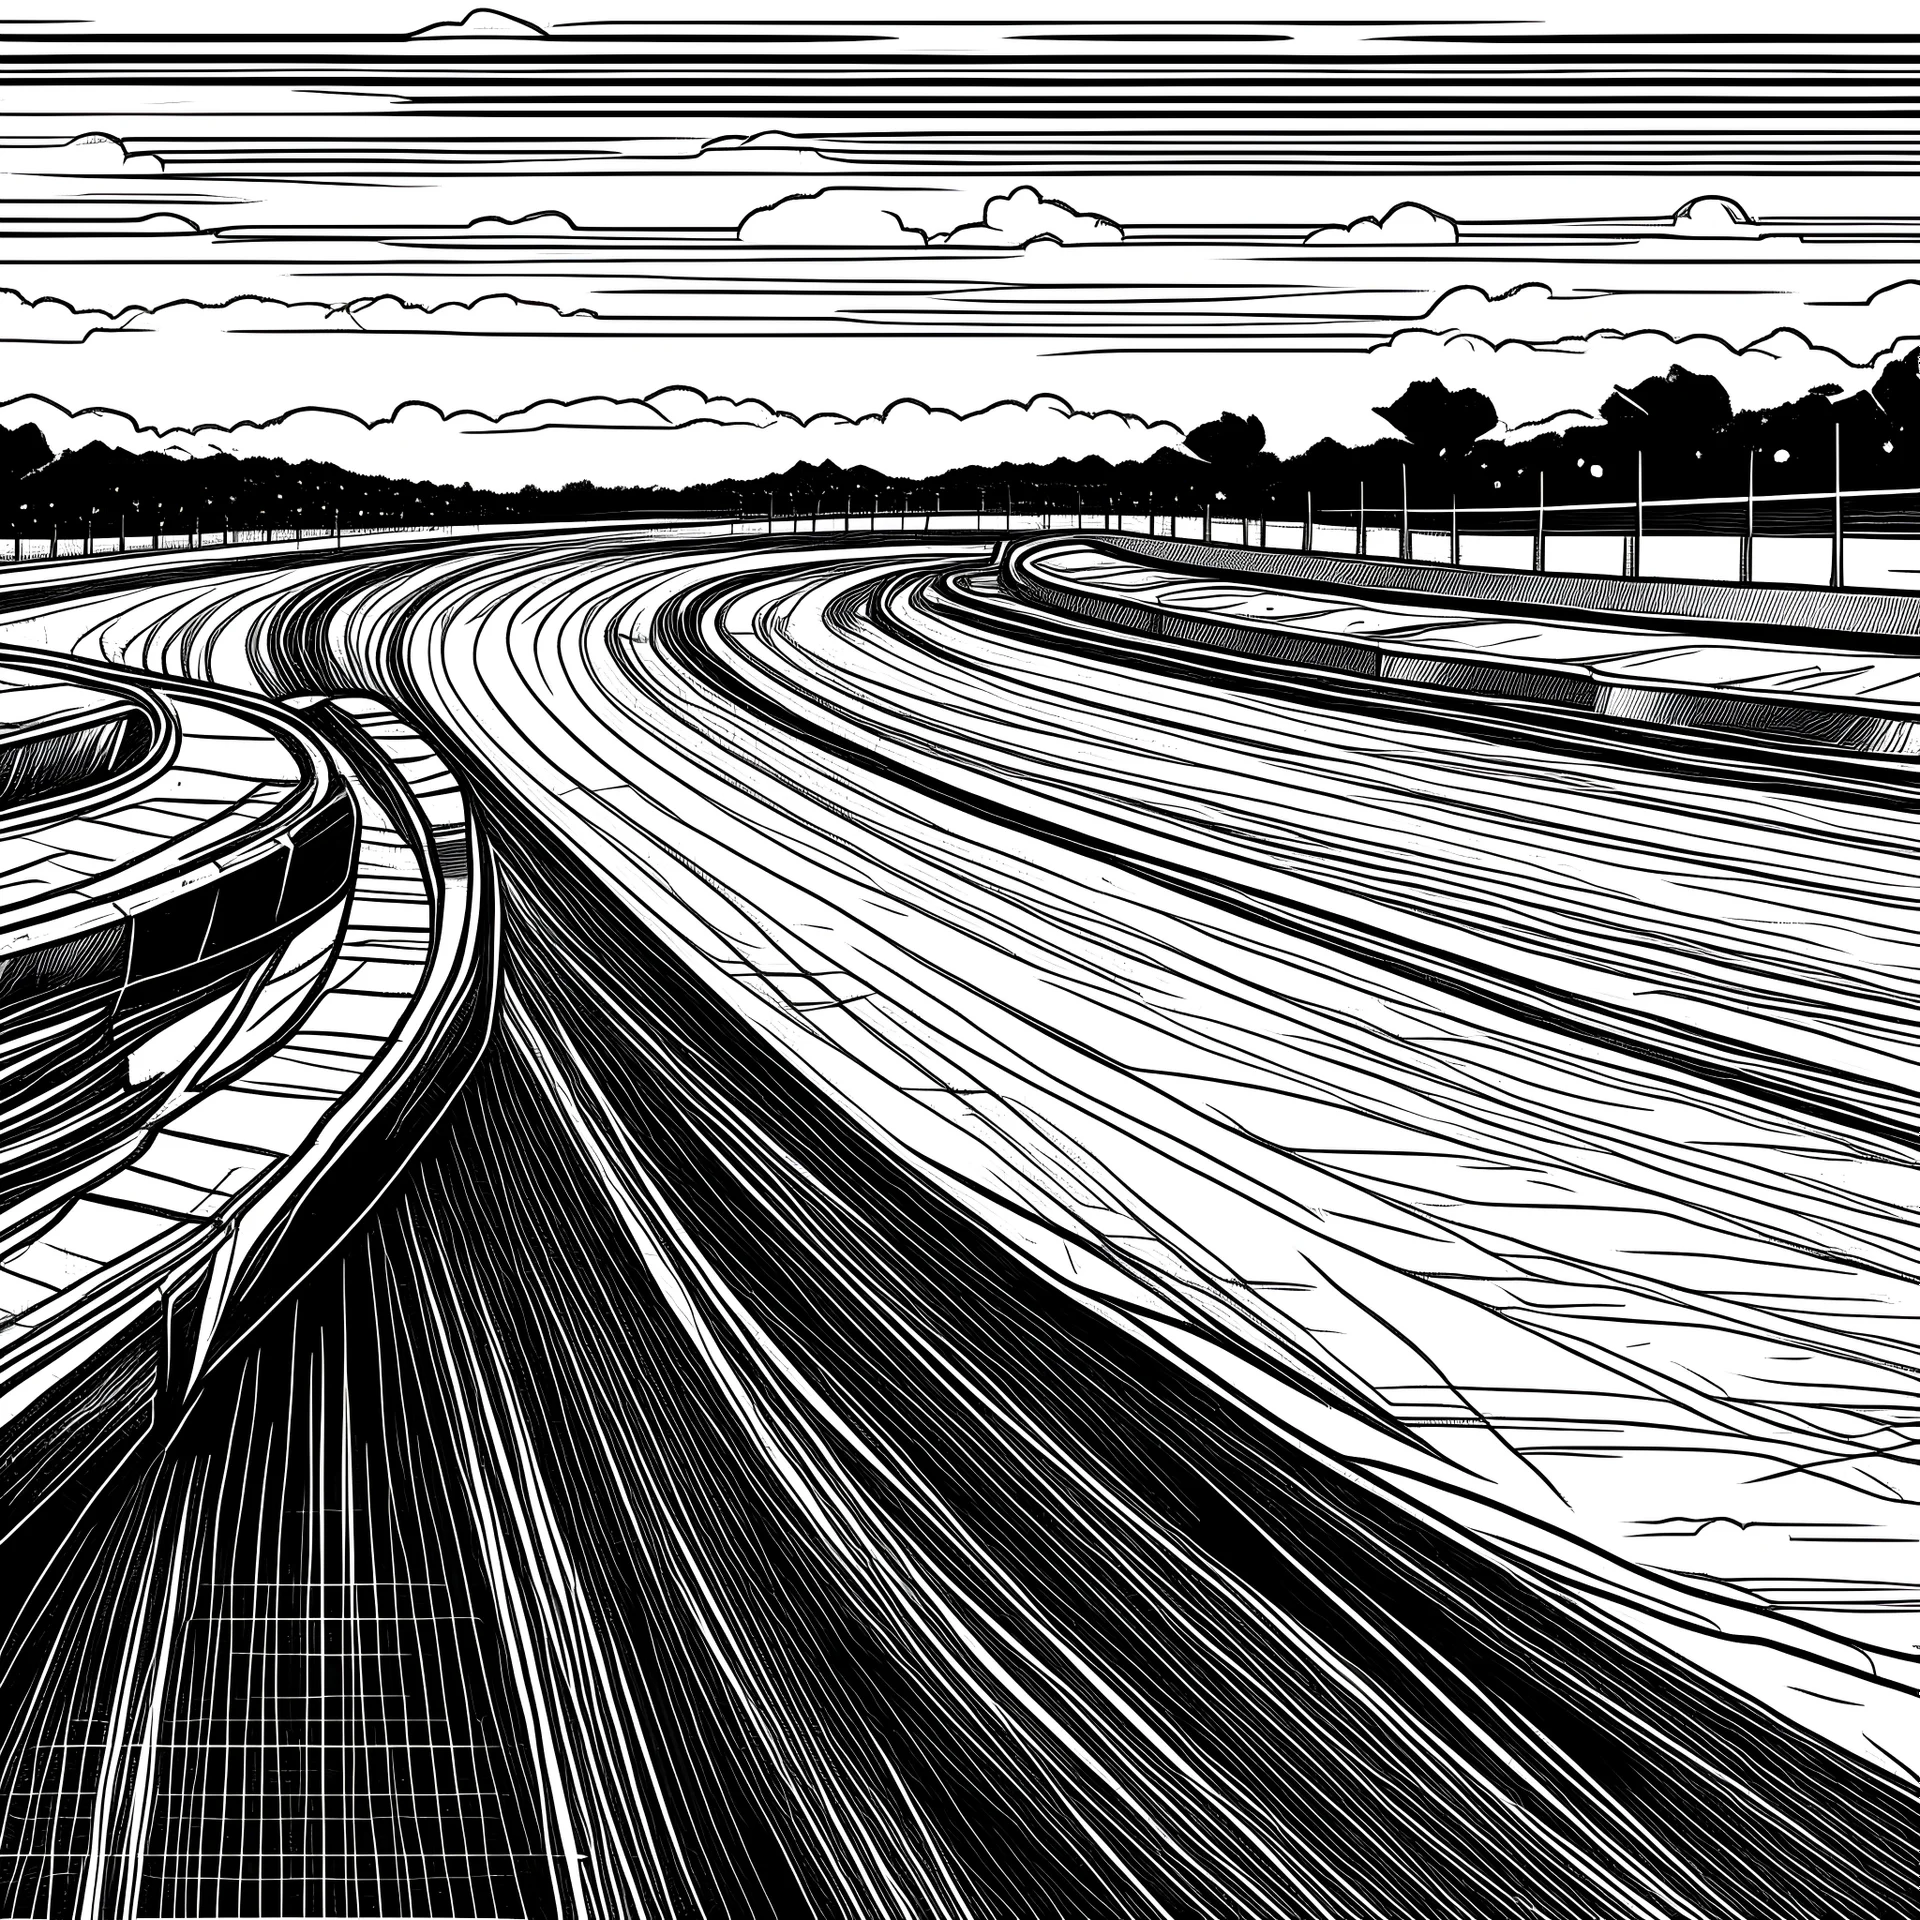 black and white landscape illustration of a race track pit lane